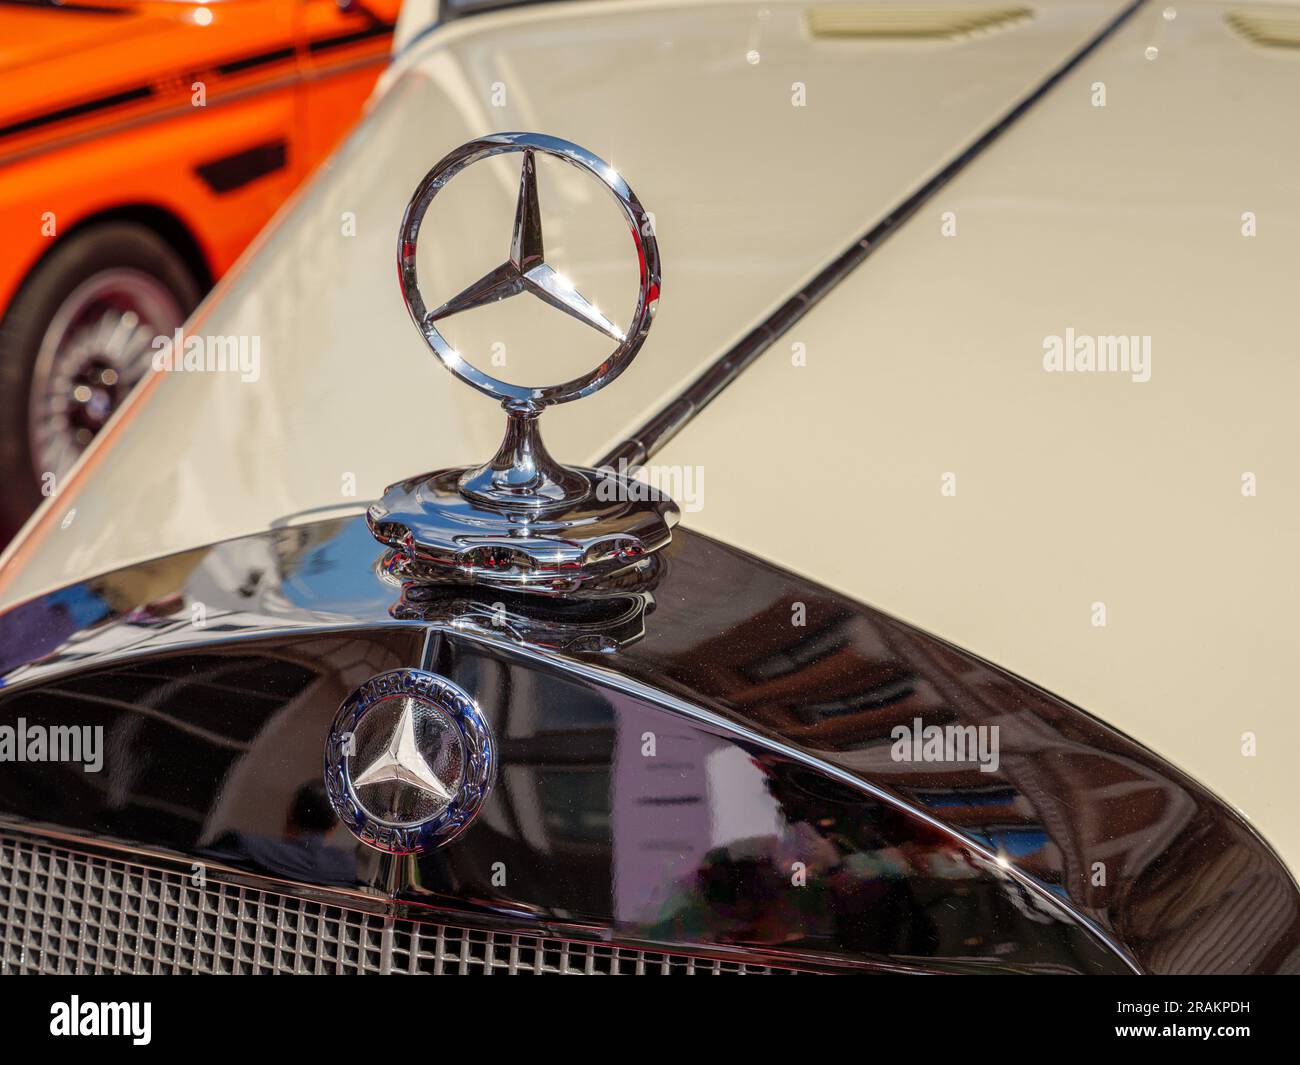 The Mercedes-Benz raised star emblem on the bonnet of a vintage car Stock Photo